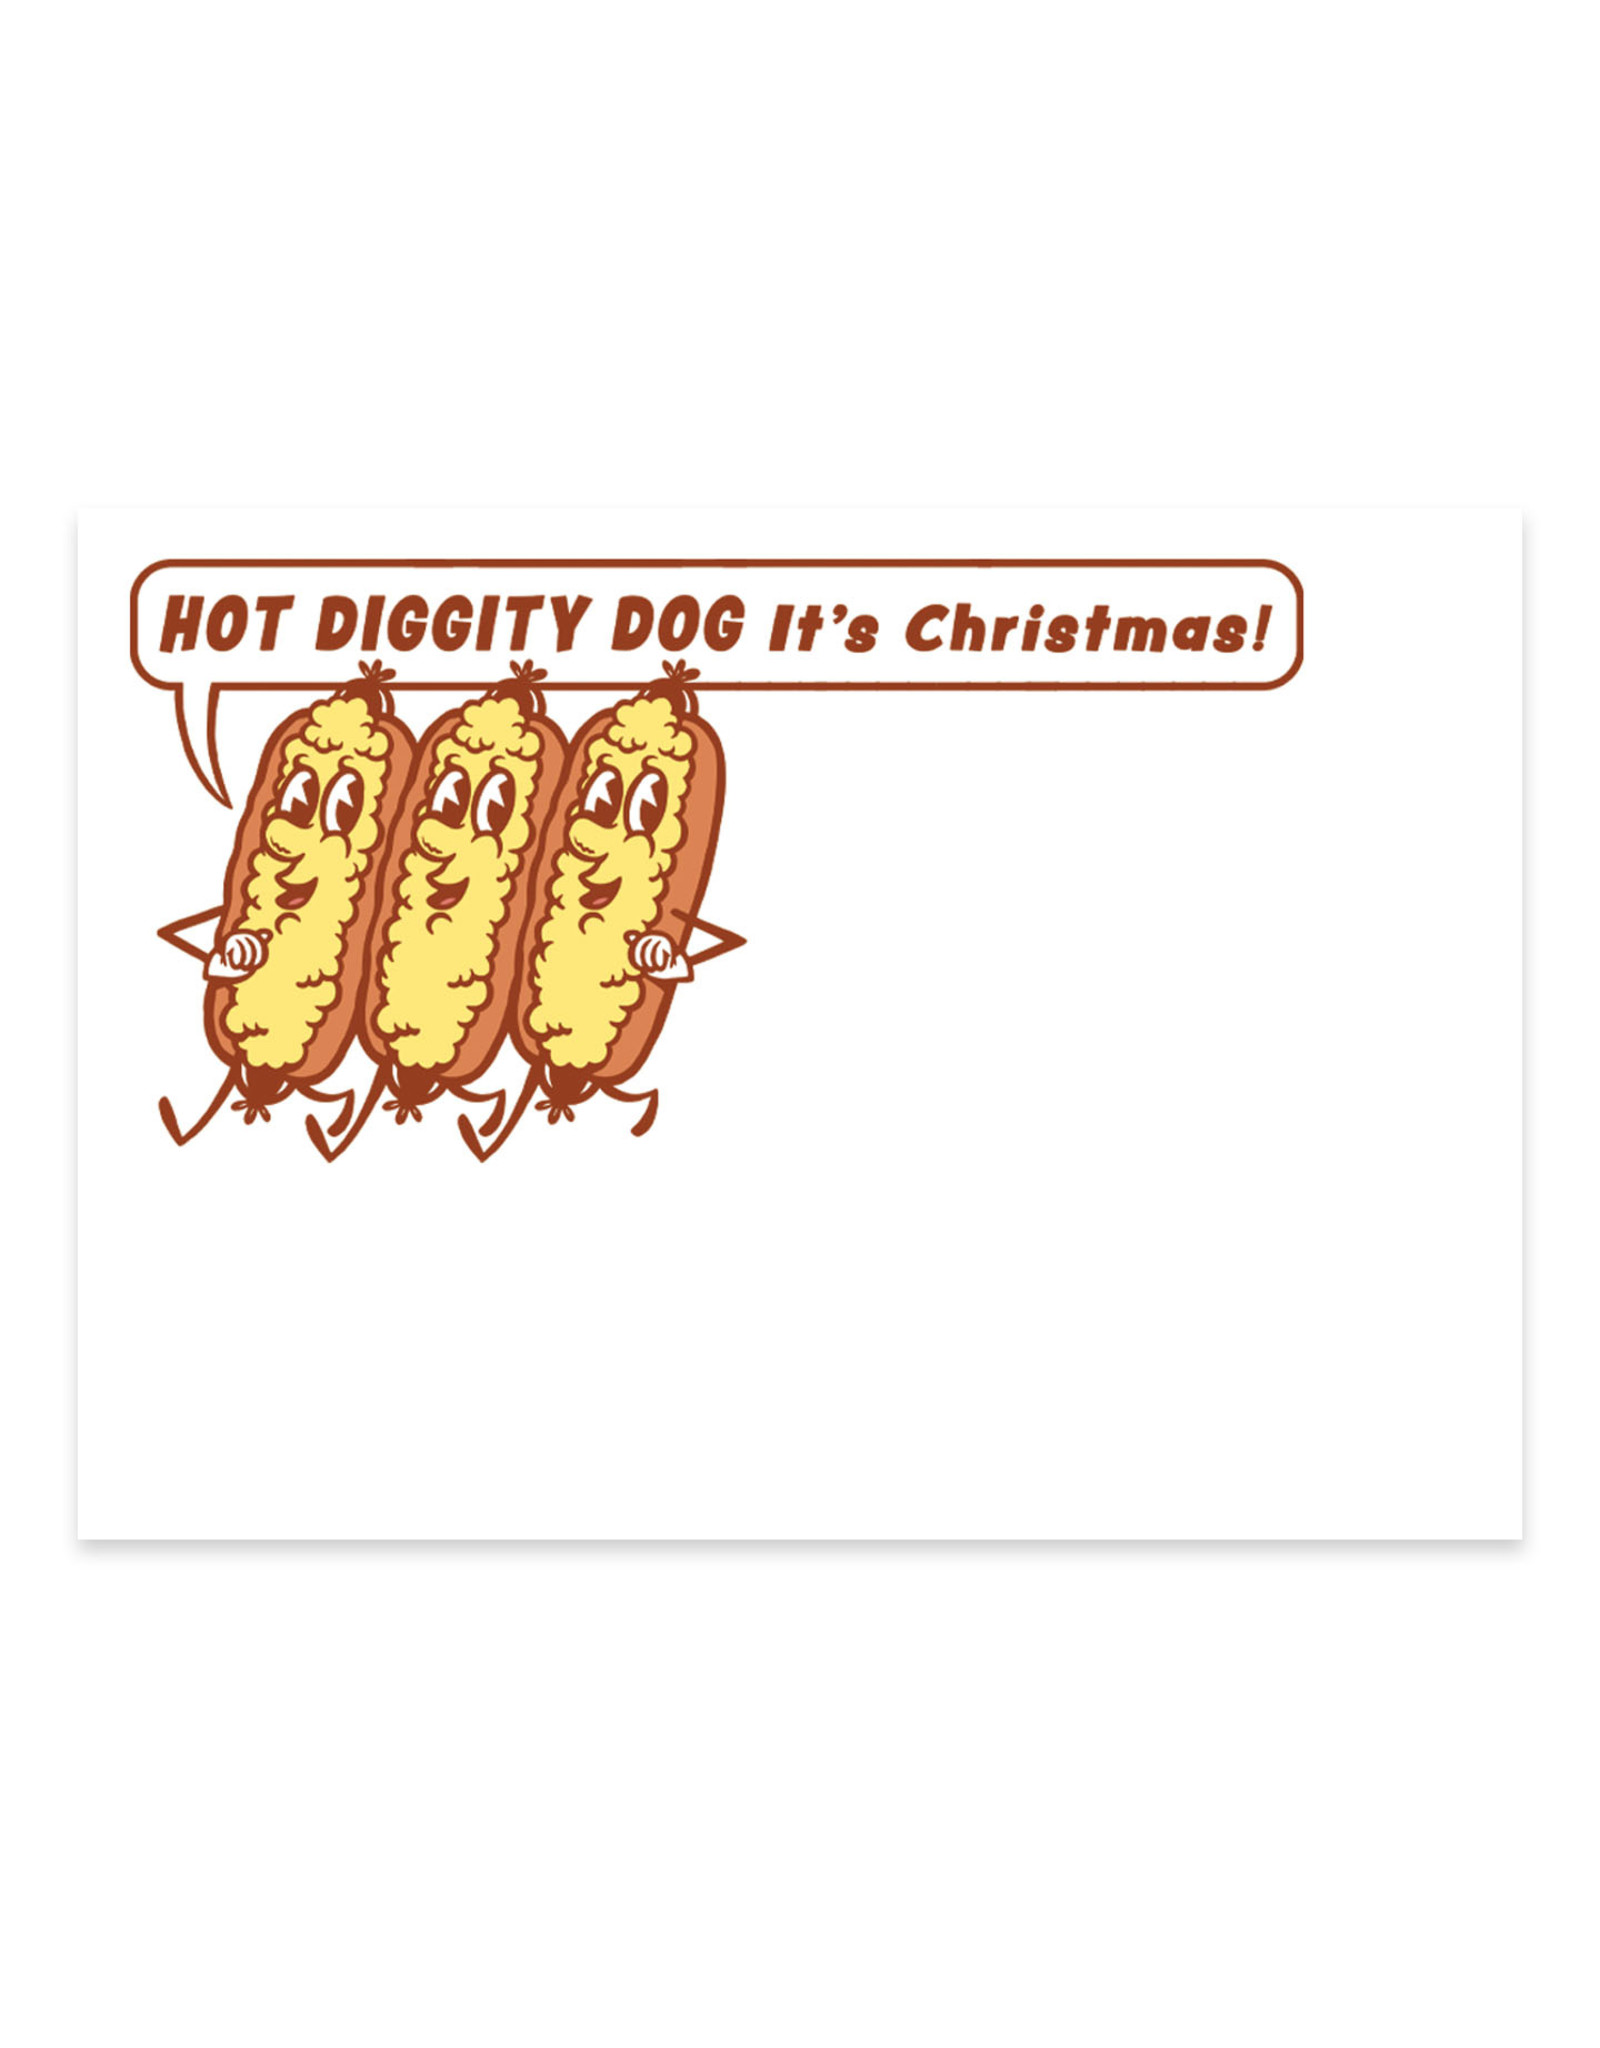 Hot Diggity Dog It's Christmas Mini Card Set of 10